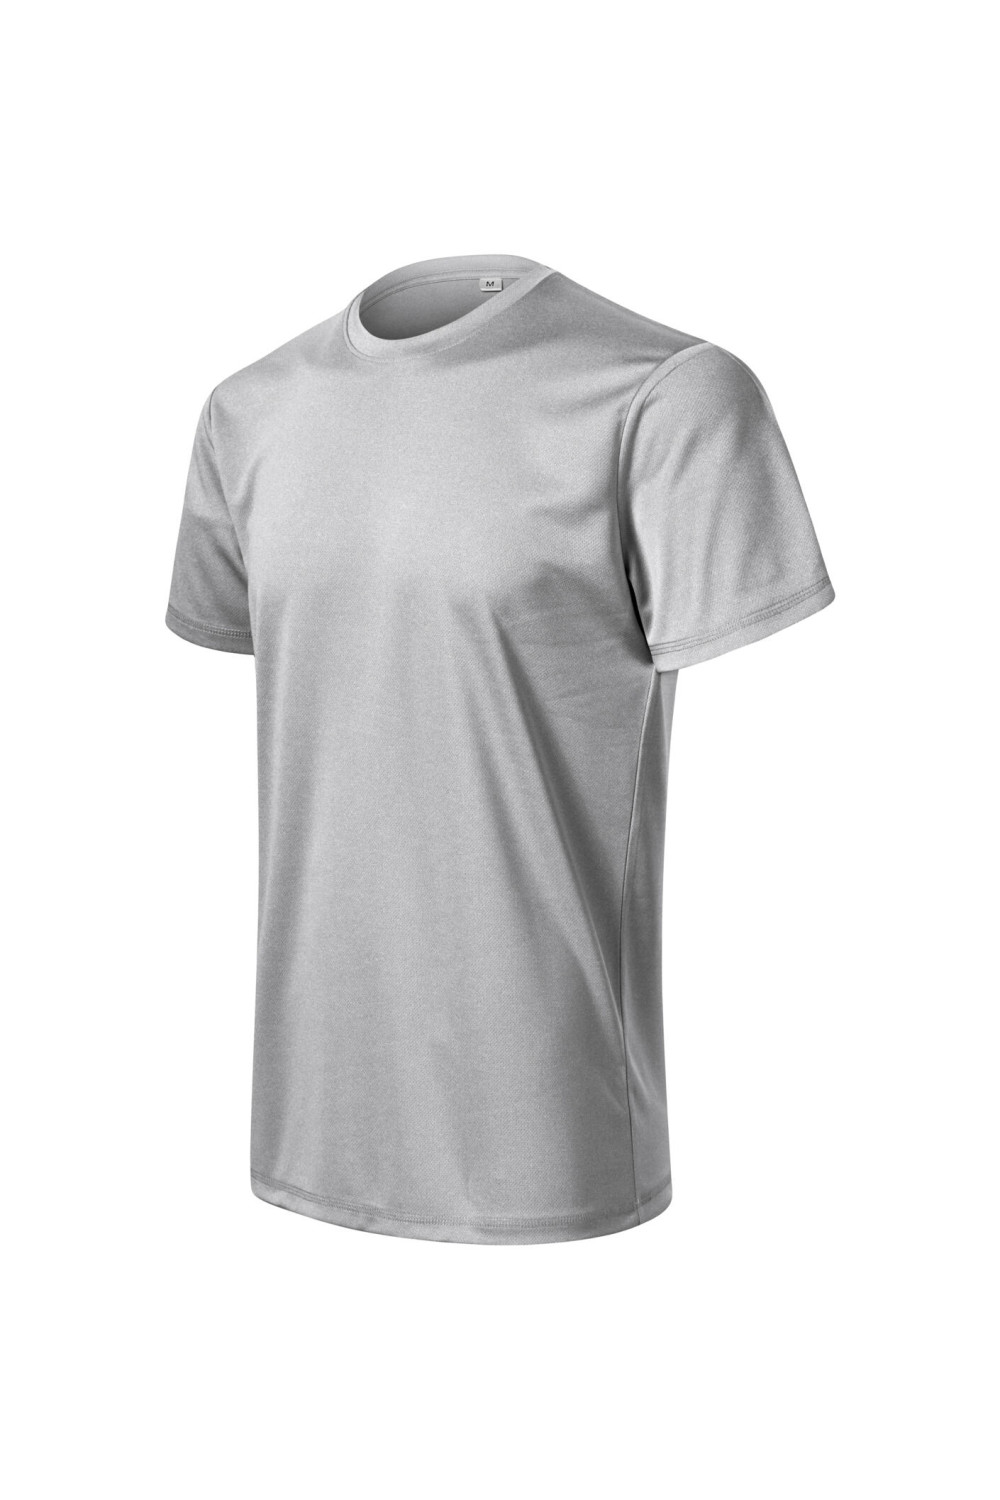 CHANCE (GRS) 810 MALFINI ADLER Koszulka męska t-shirt sportowy srebrny melanż